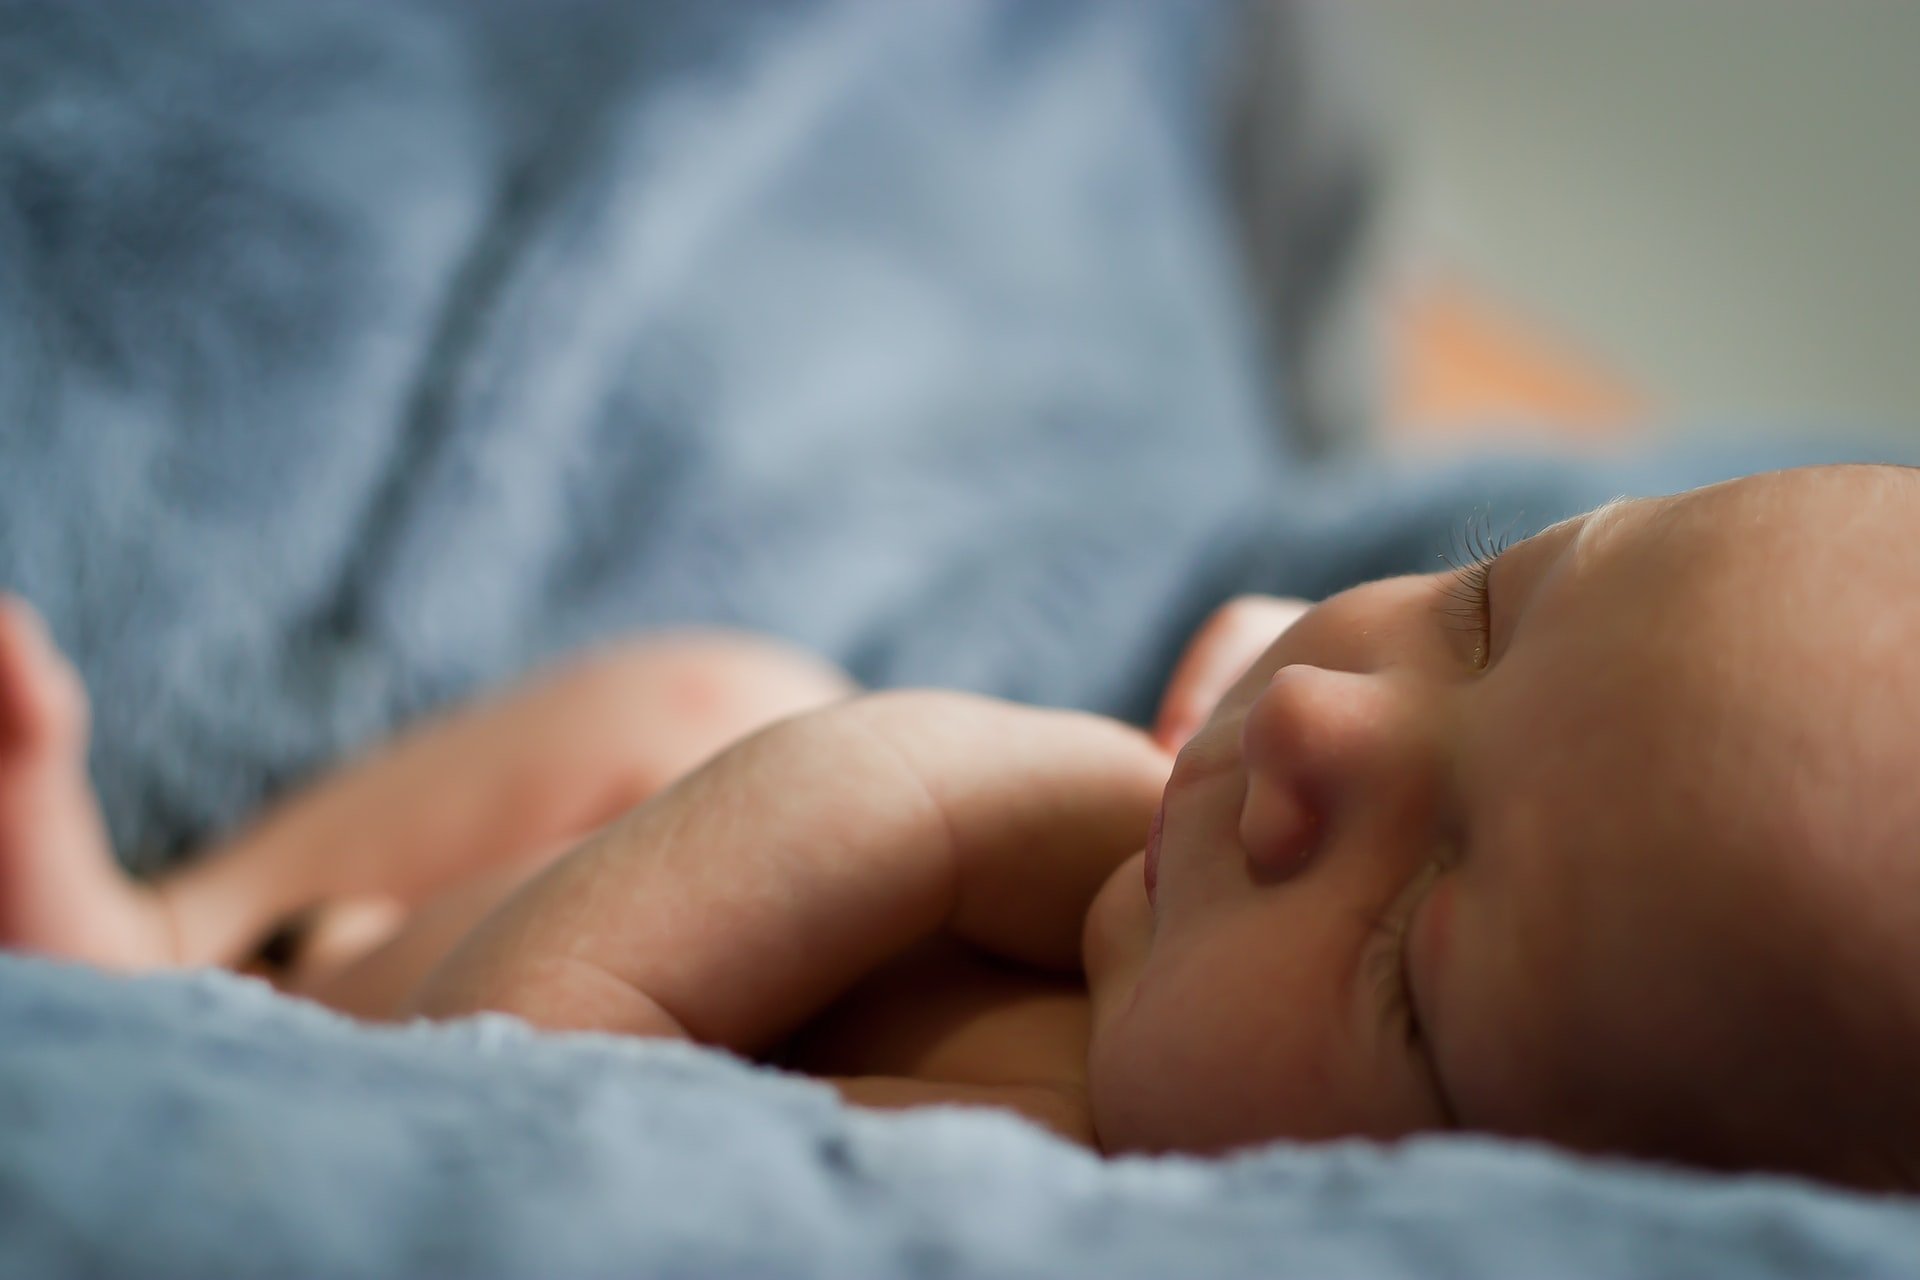 A newborn baby sleeping peacefully | Source: Unsplash